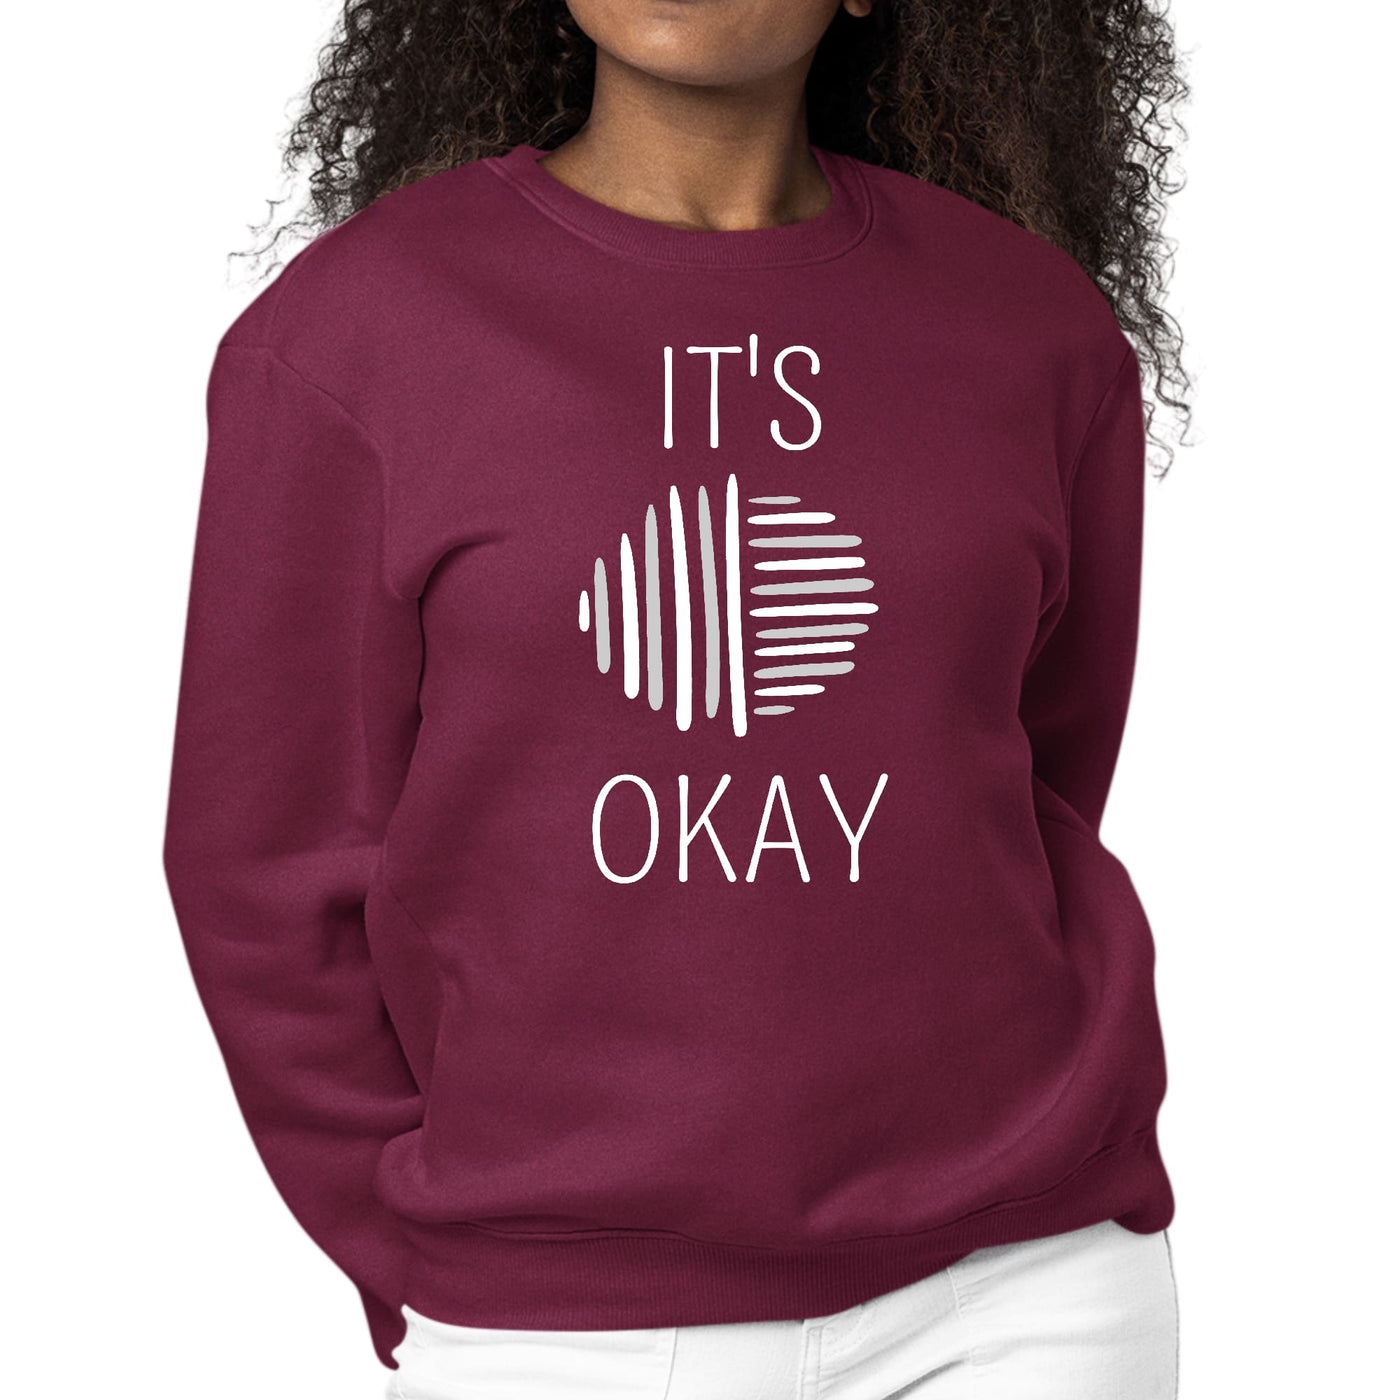 Womens Graphic Sweatshirt Say It Soul Its Okay Grey And White Line - Womens